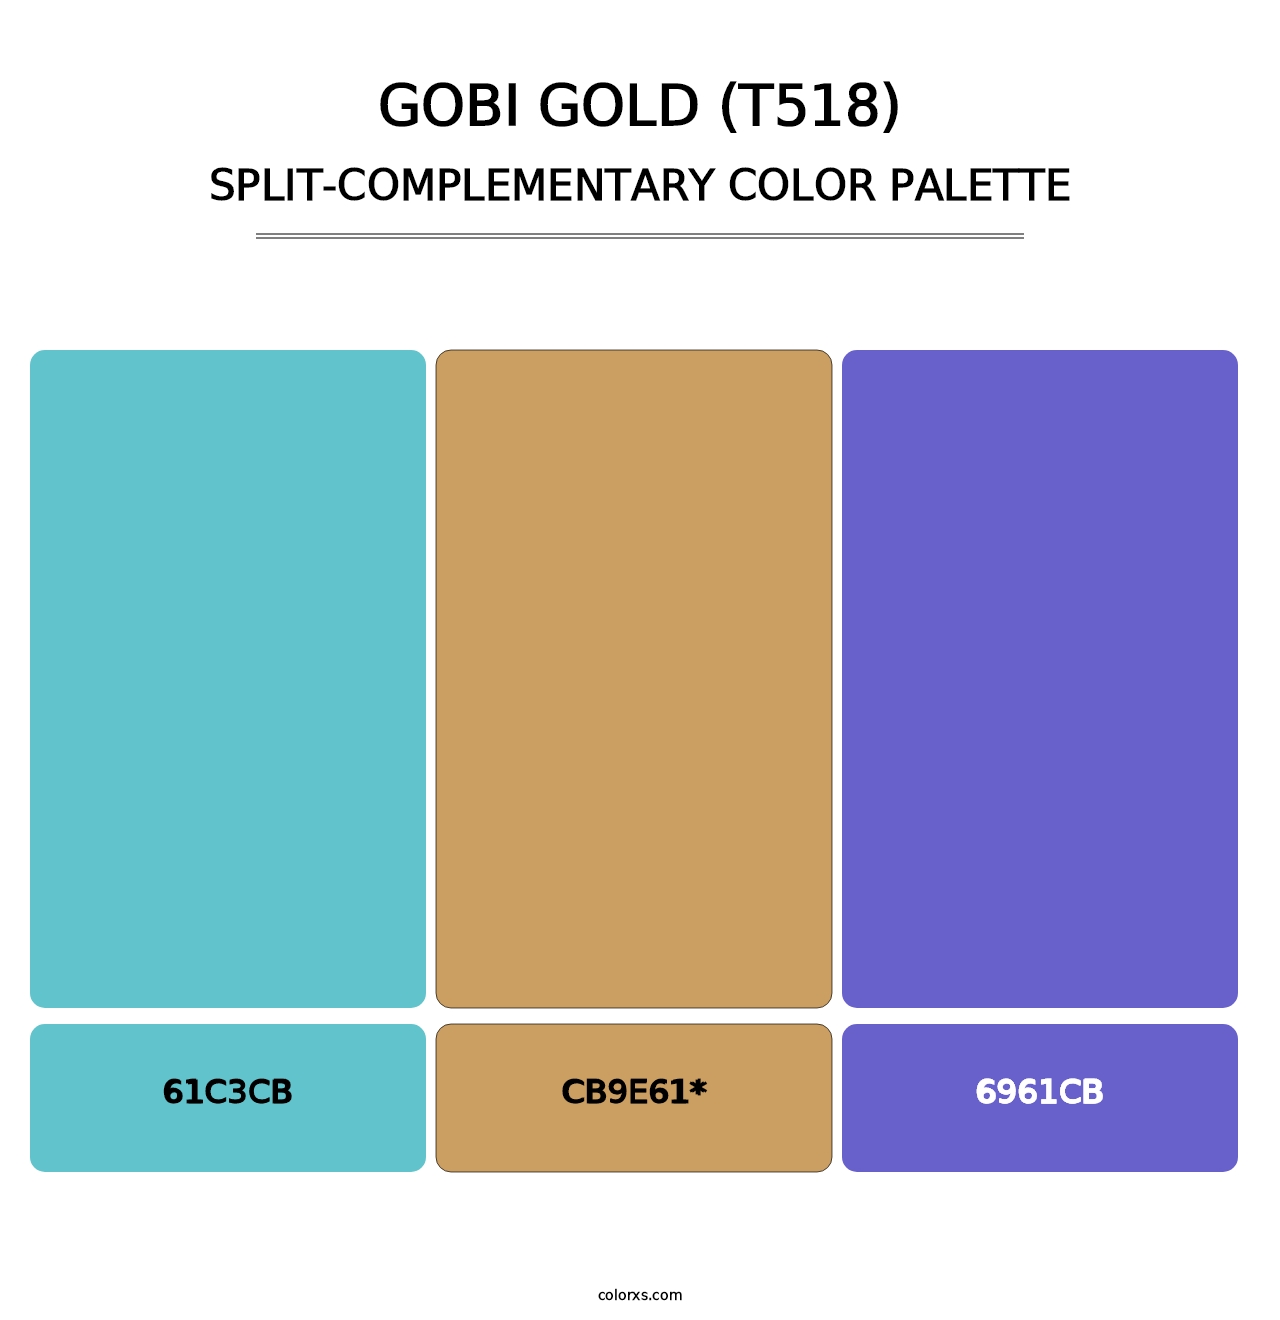 Gobi Gold (T518) - Split-Complementary Color Palette